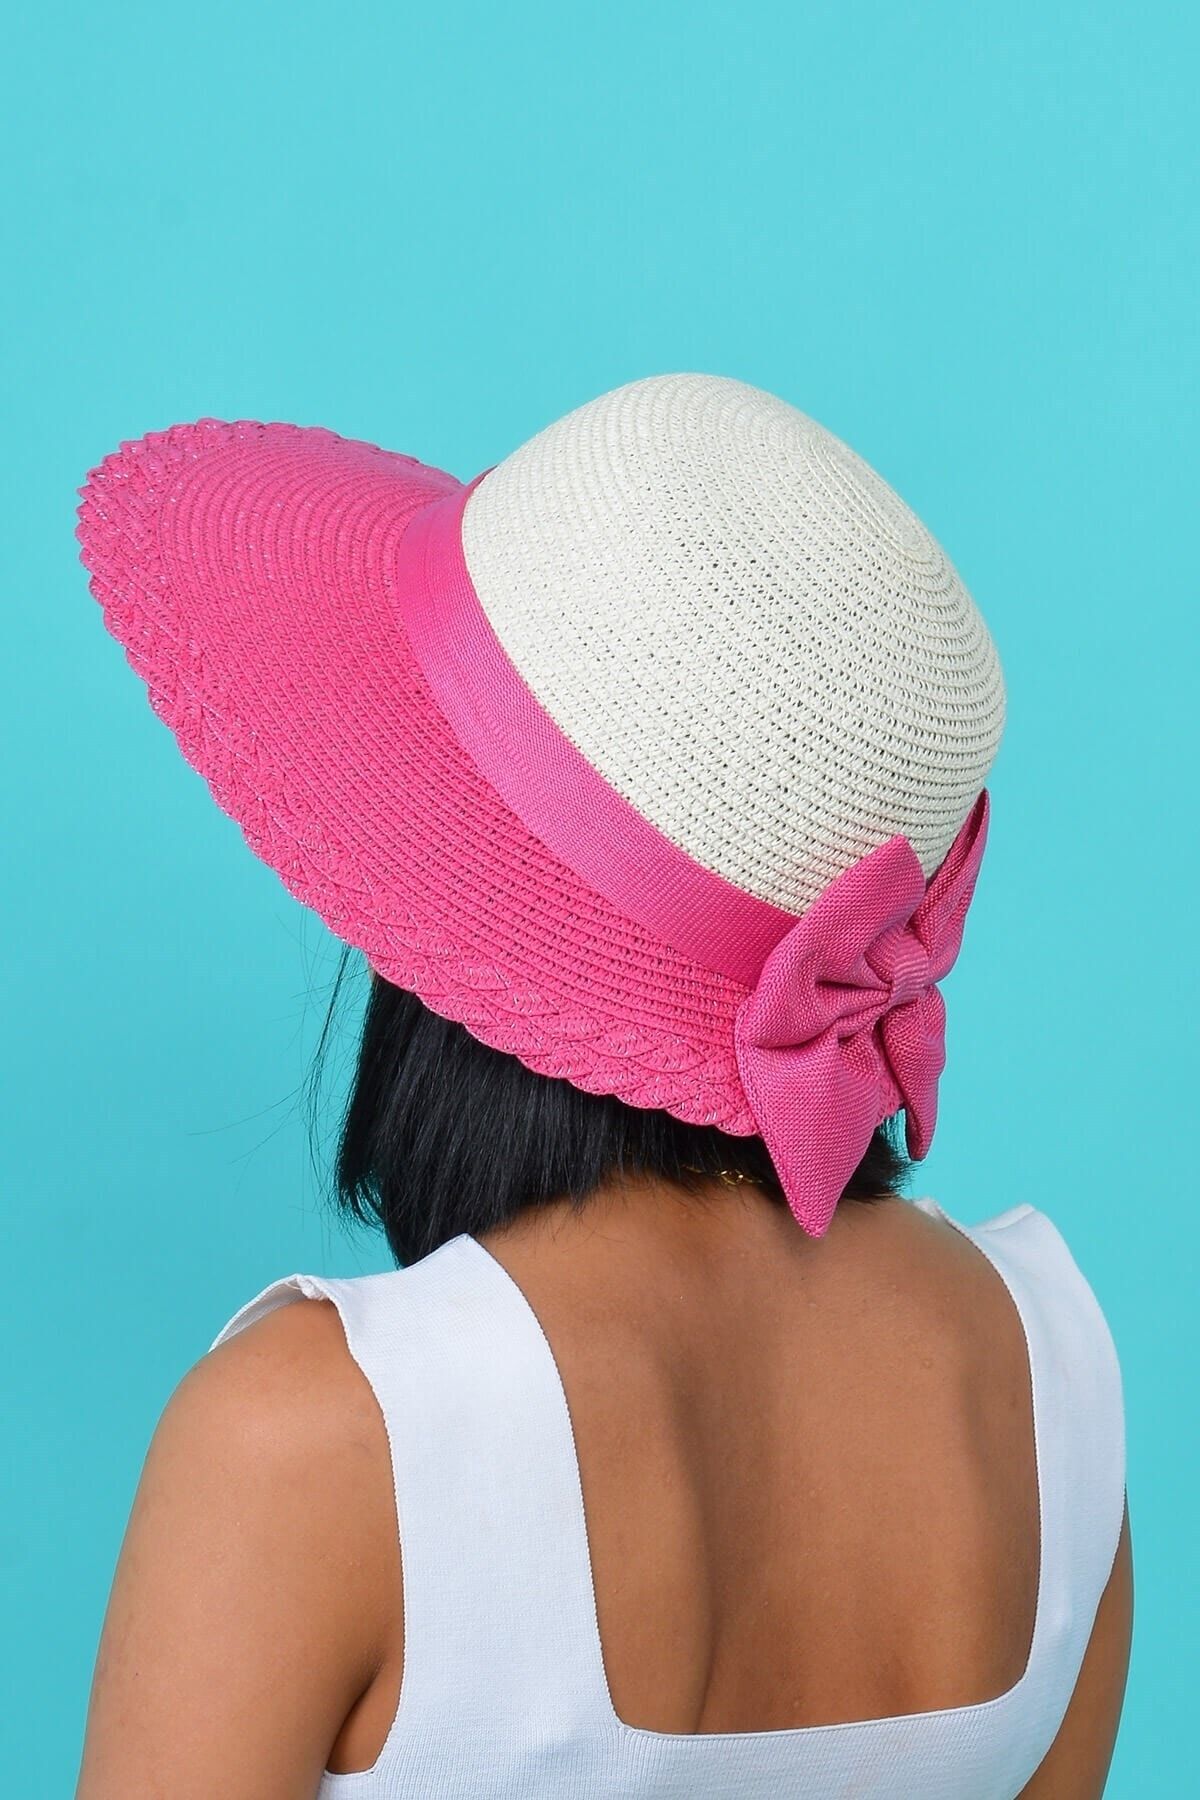 Mossta Kadın Fuşya Fiyonk Detaylı Hasır Şapka